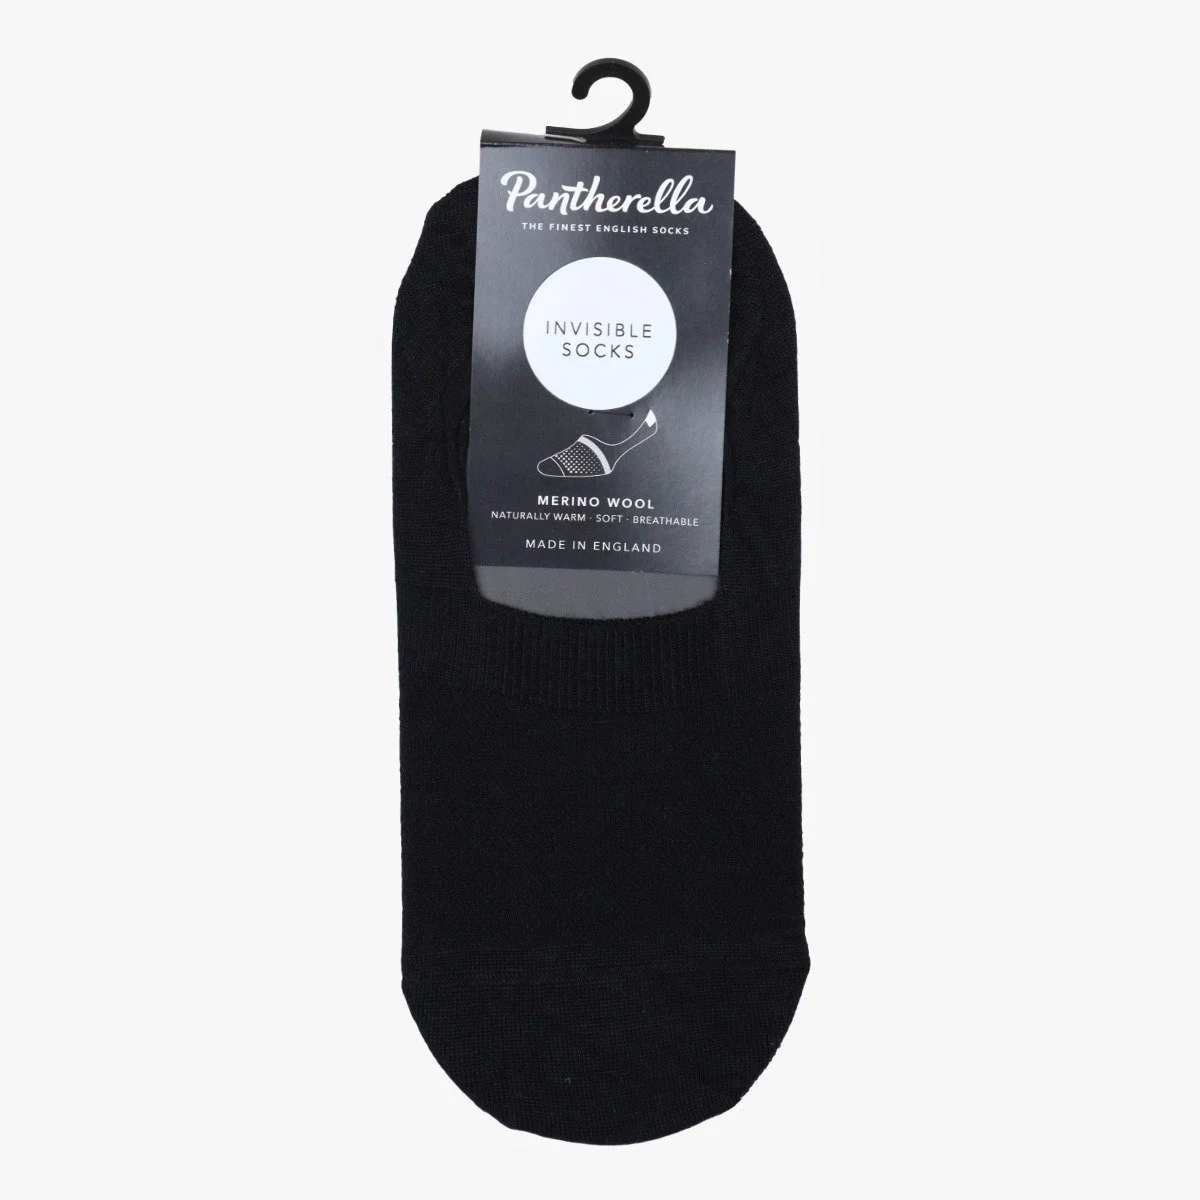 Pantherella Mahon black merino wool invisible men's socks